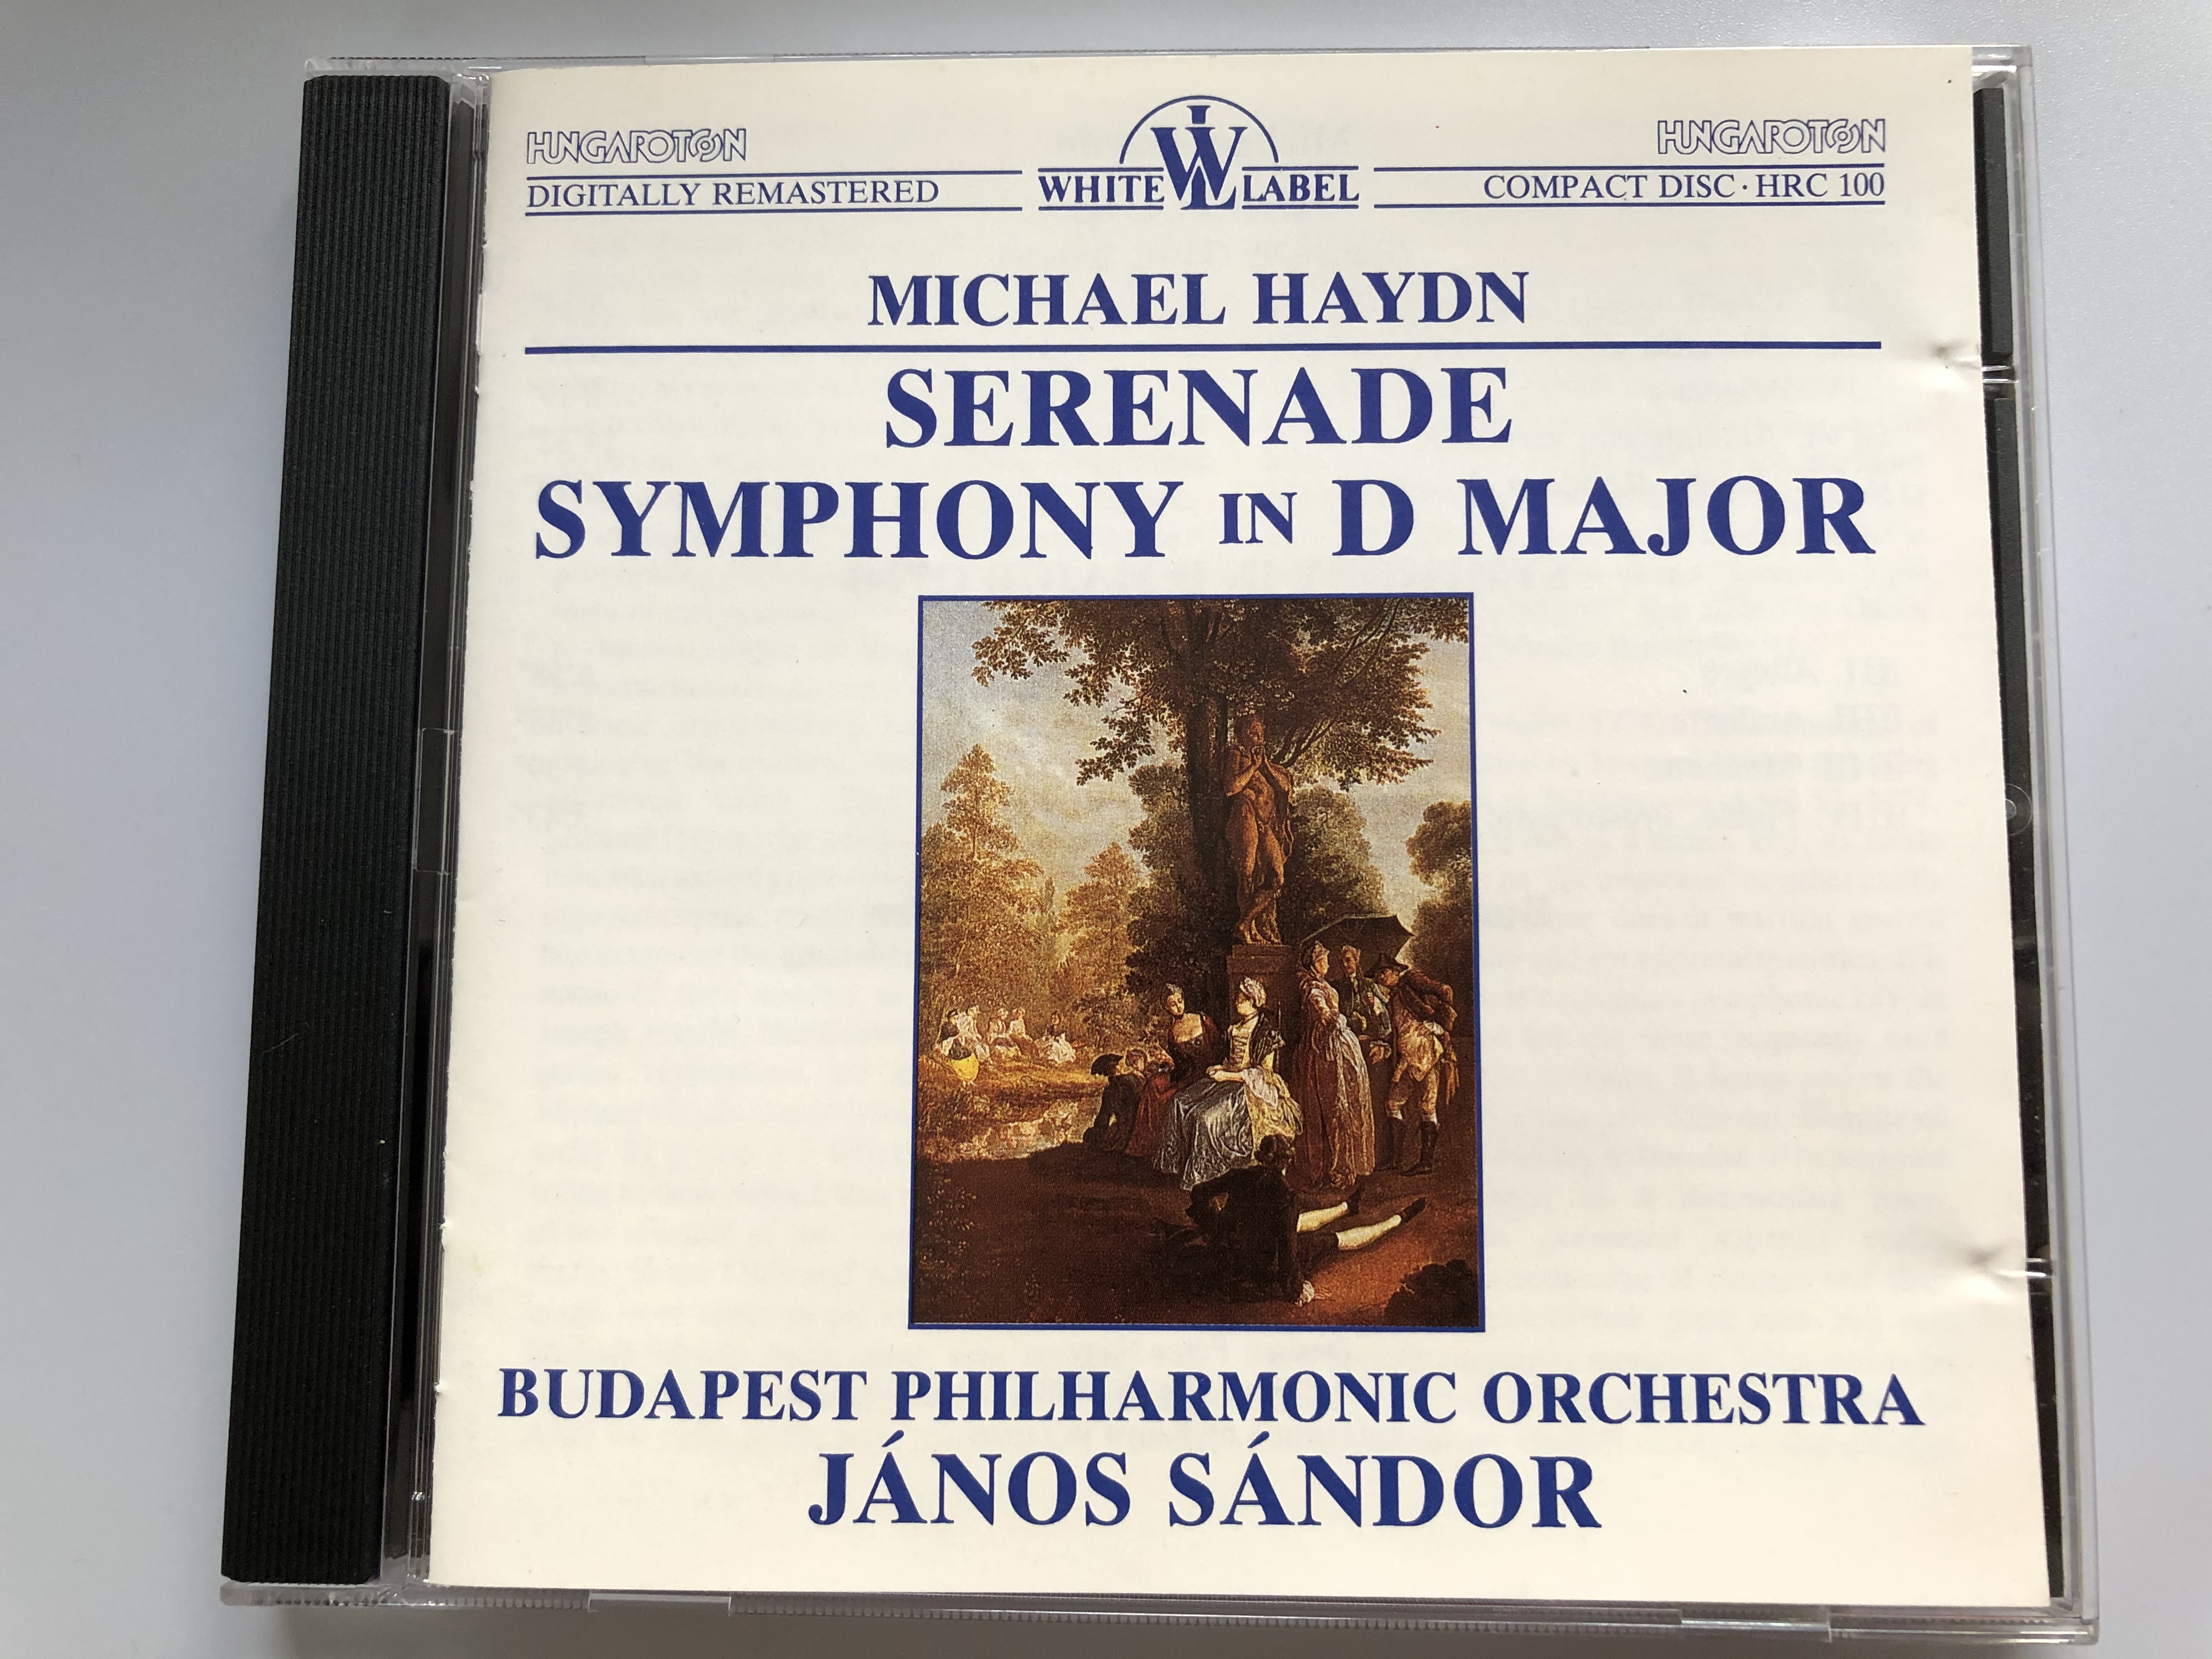 michael-haydn-serenade-symphony-in-d-major-budapest-philharmonic-orchestra-janos-sandor-hungaroton-audio-cd-1988-stereo-hrc-100-1-.jpg